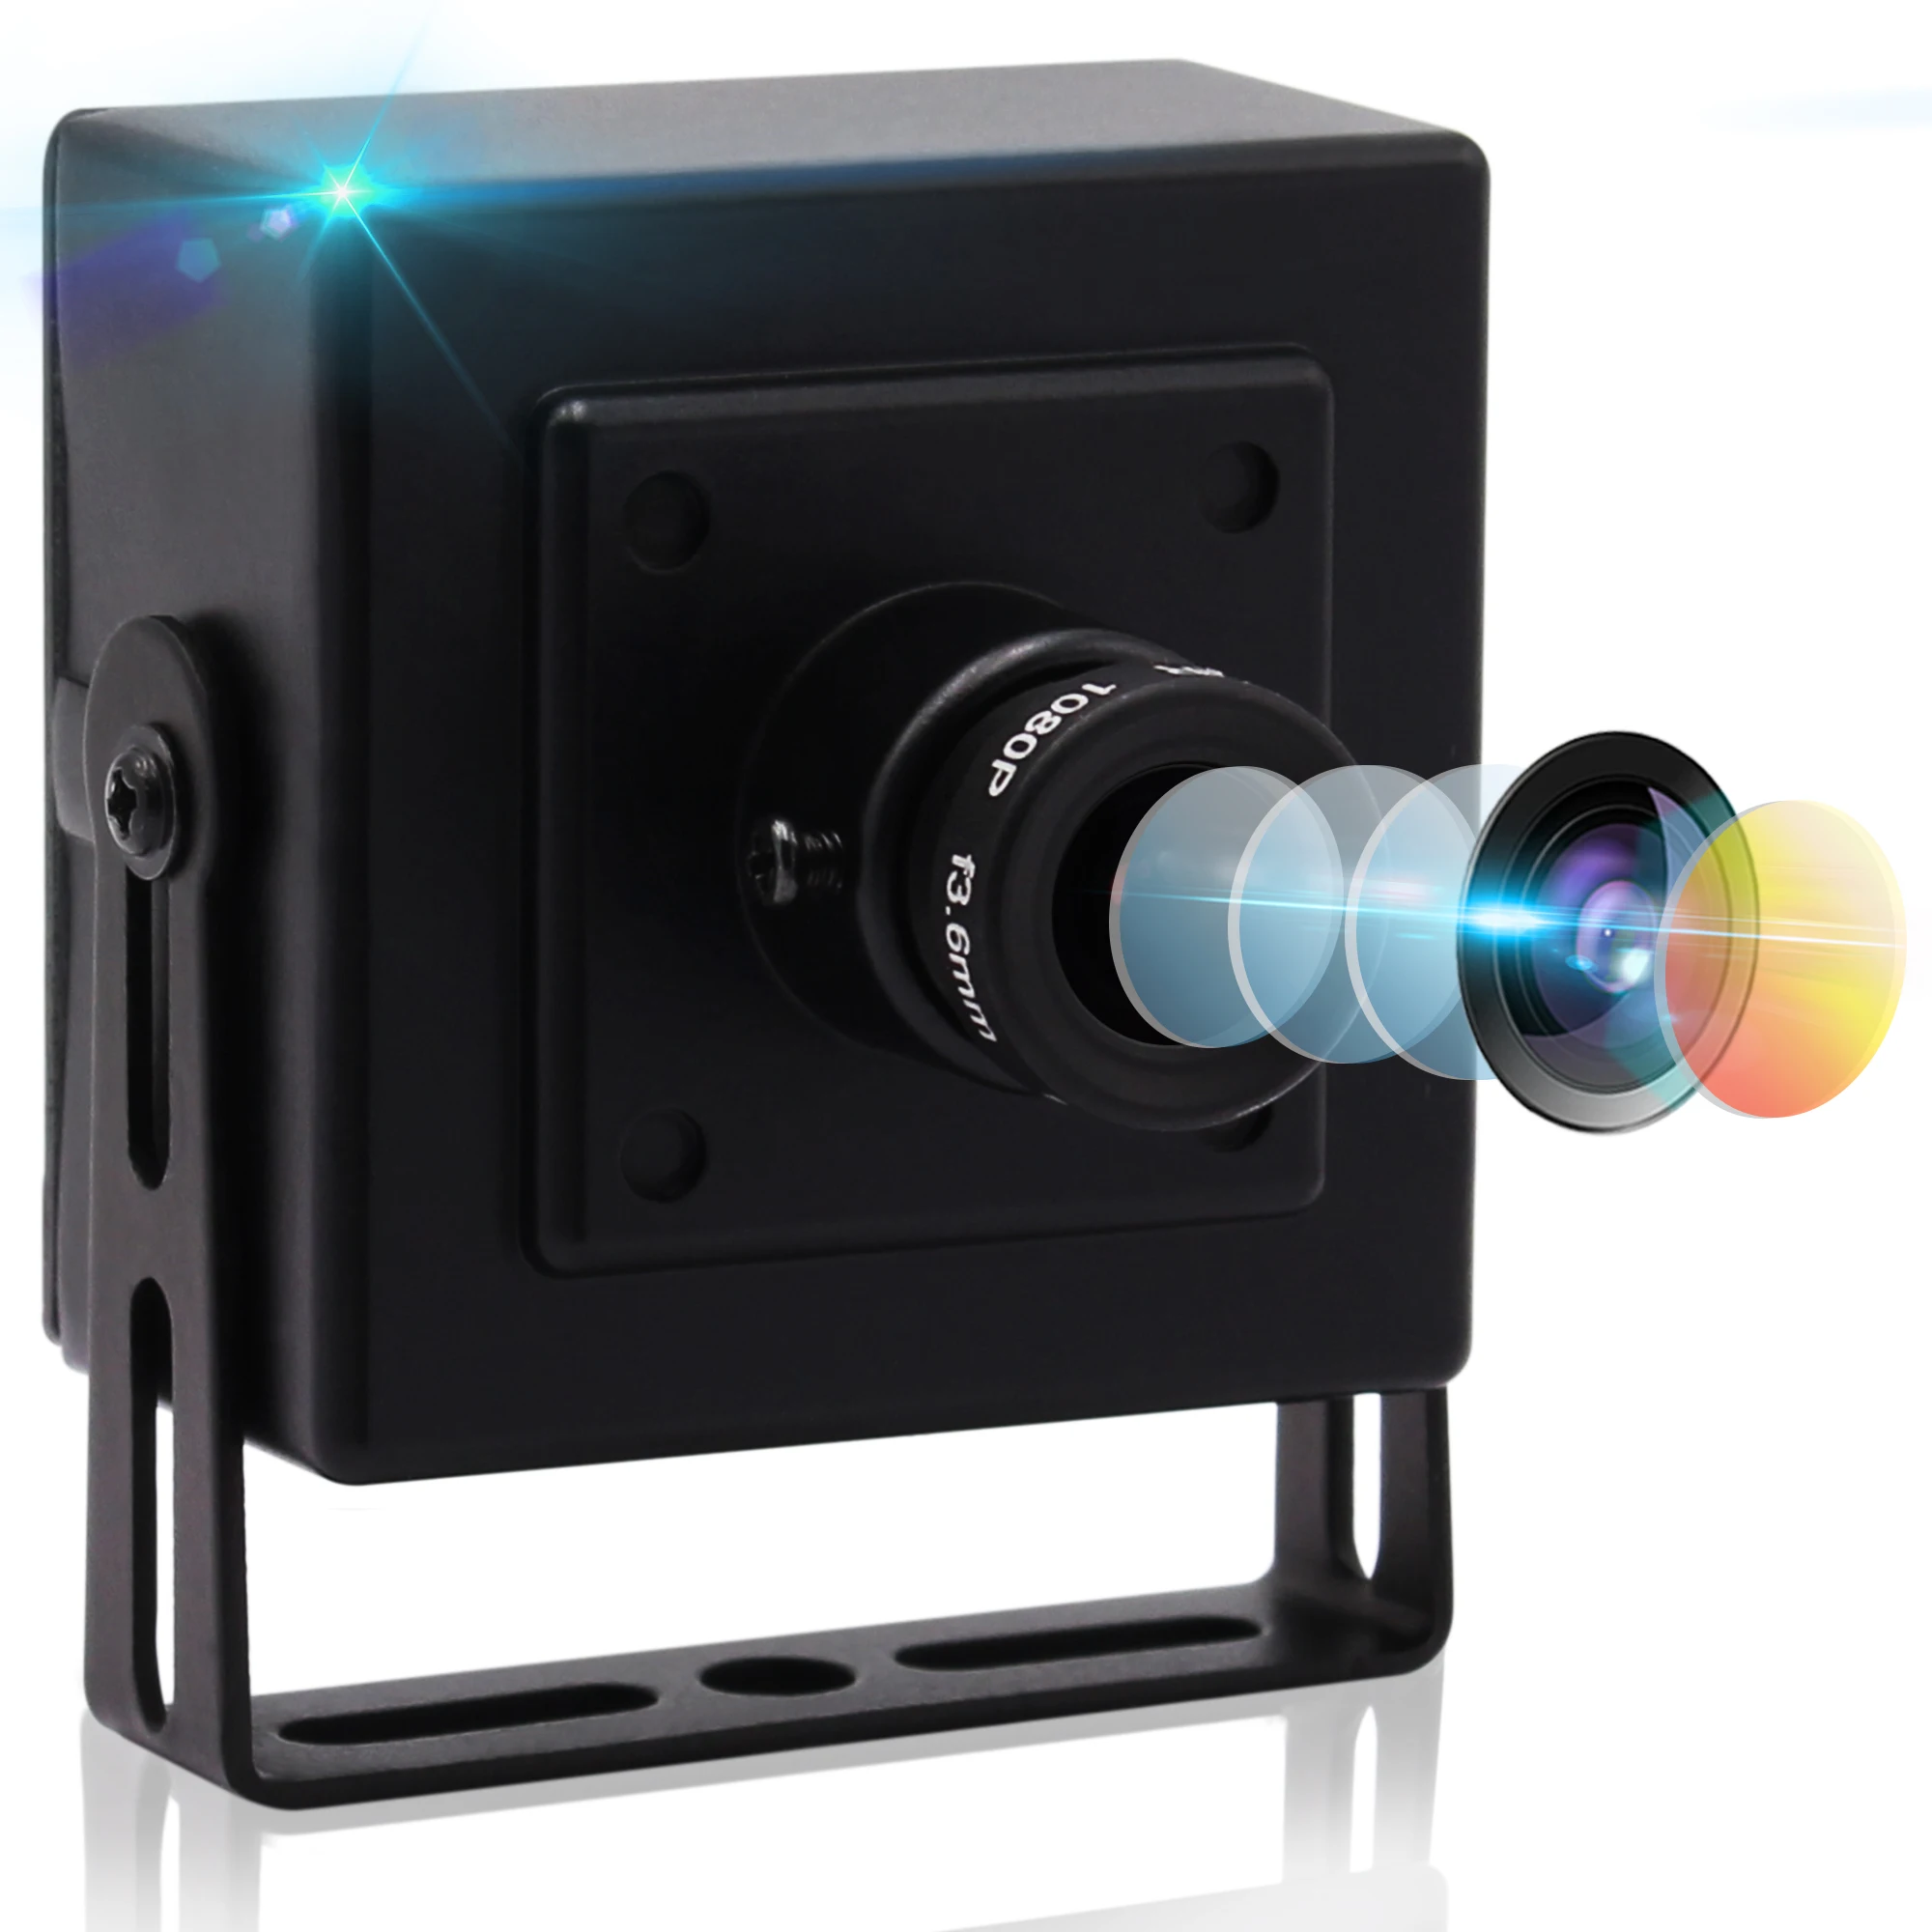 HD 8MP IMX179 Sensor UVC Camera Module Video Webcam with 2.8mm Lens For Windows 